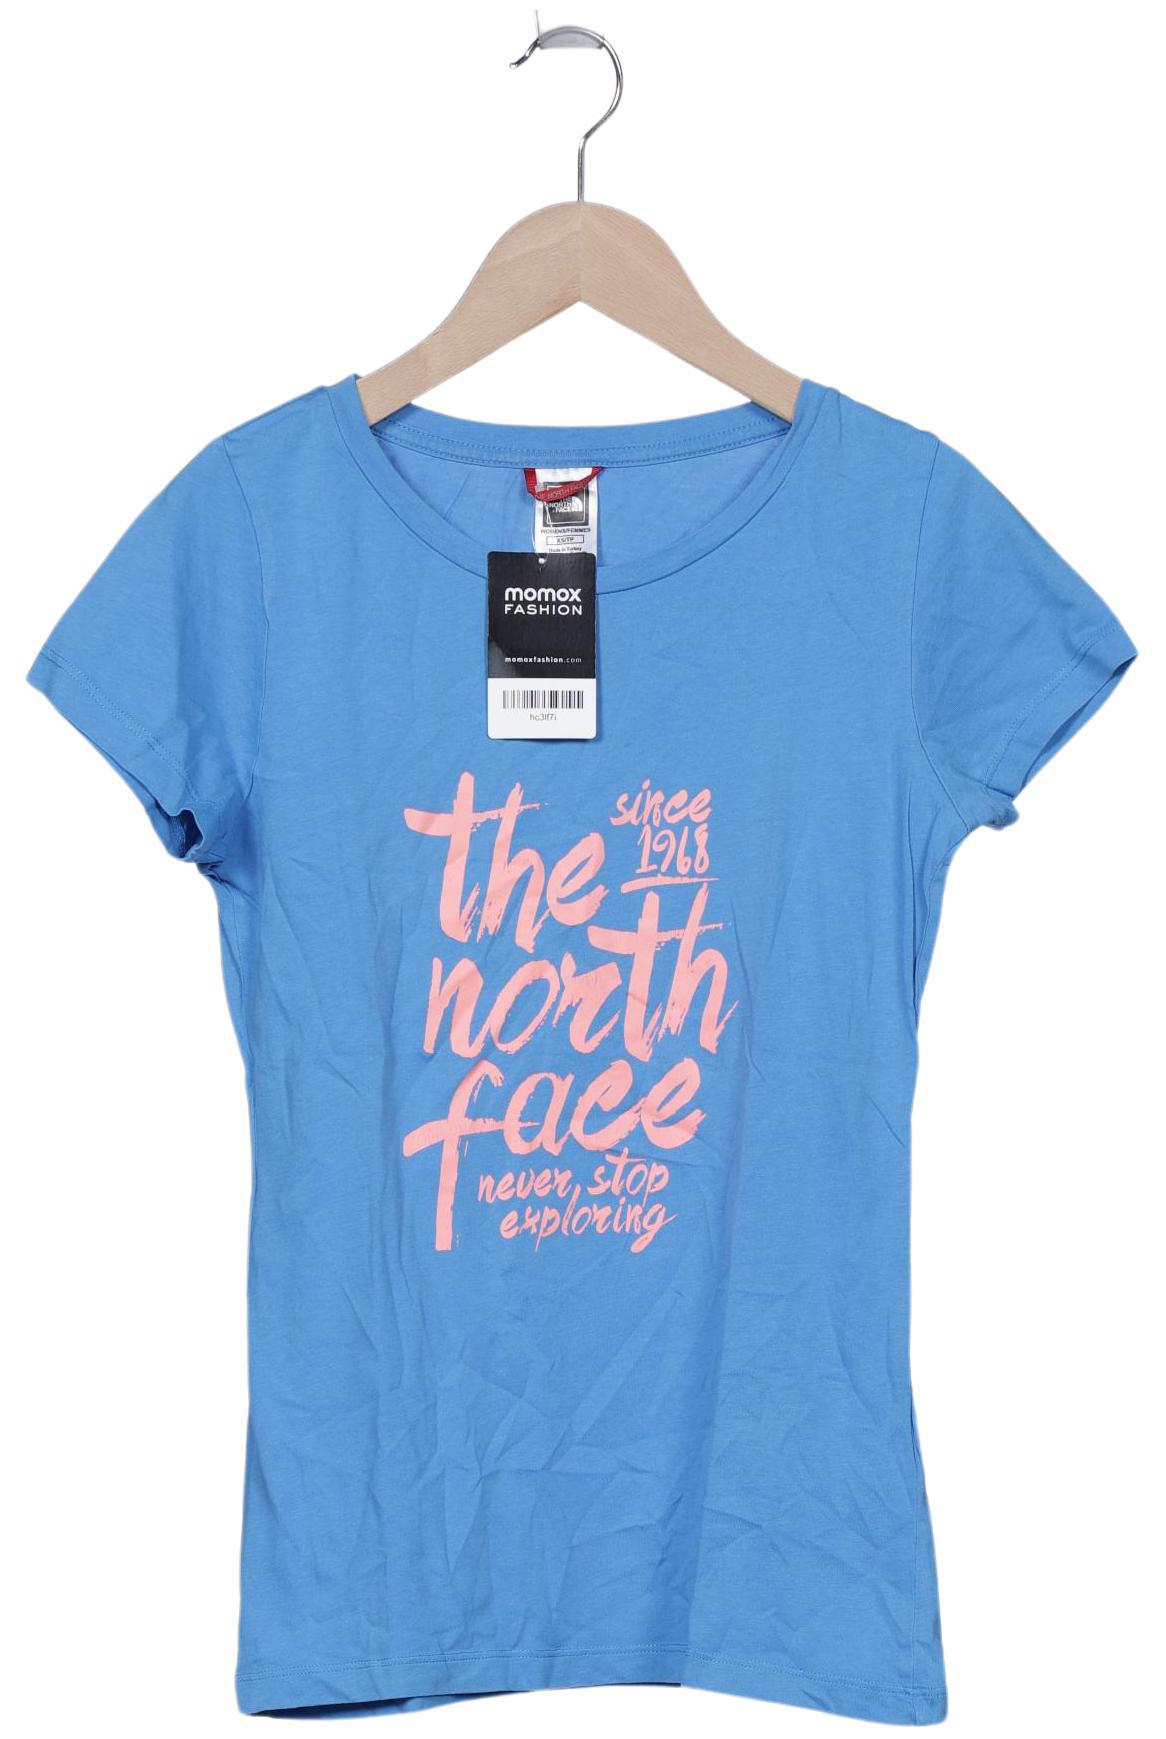 The North Face Damen T-Shirt, blau, Gr. 34 von The North Face